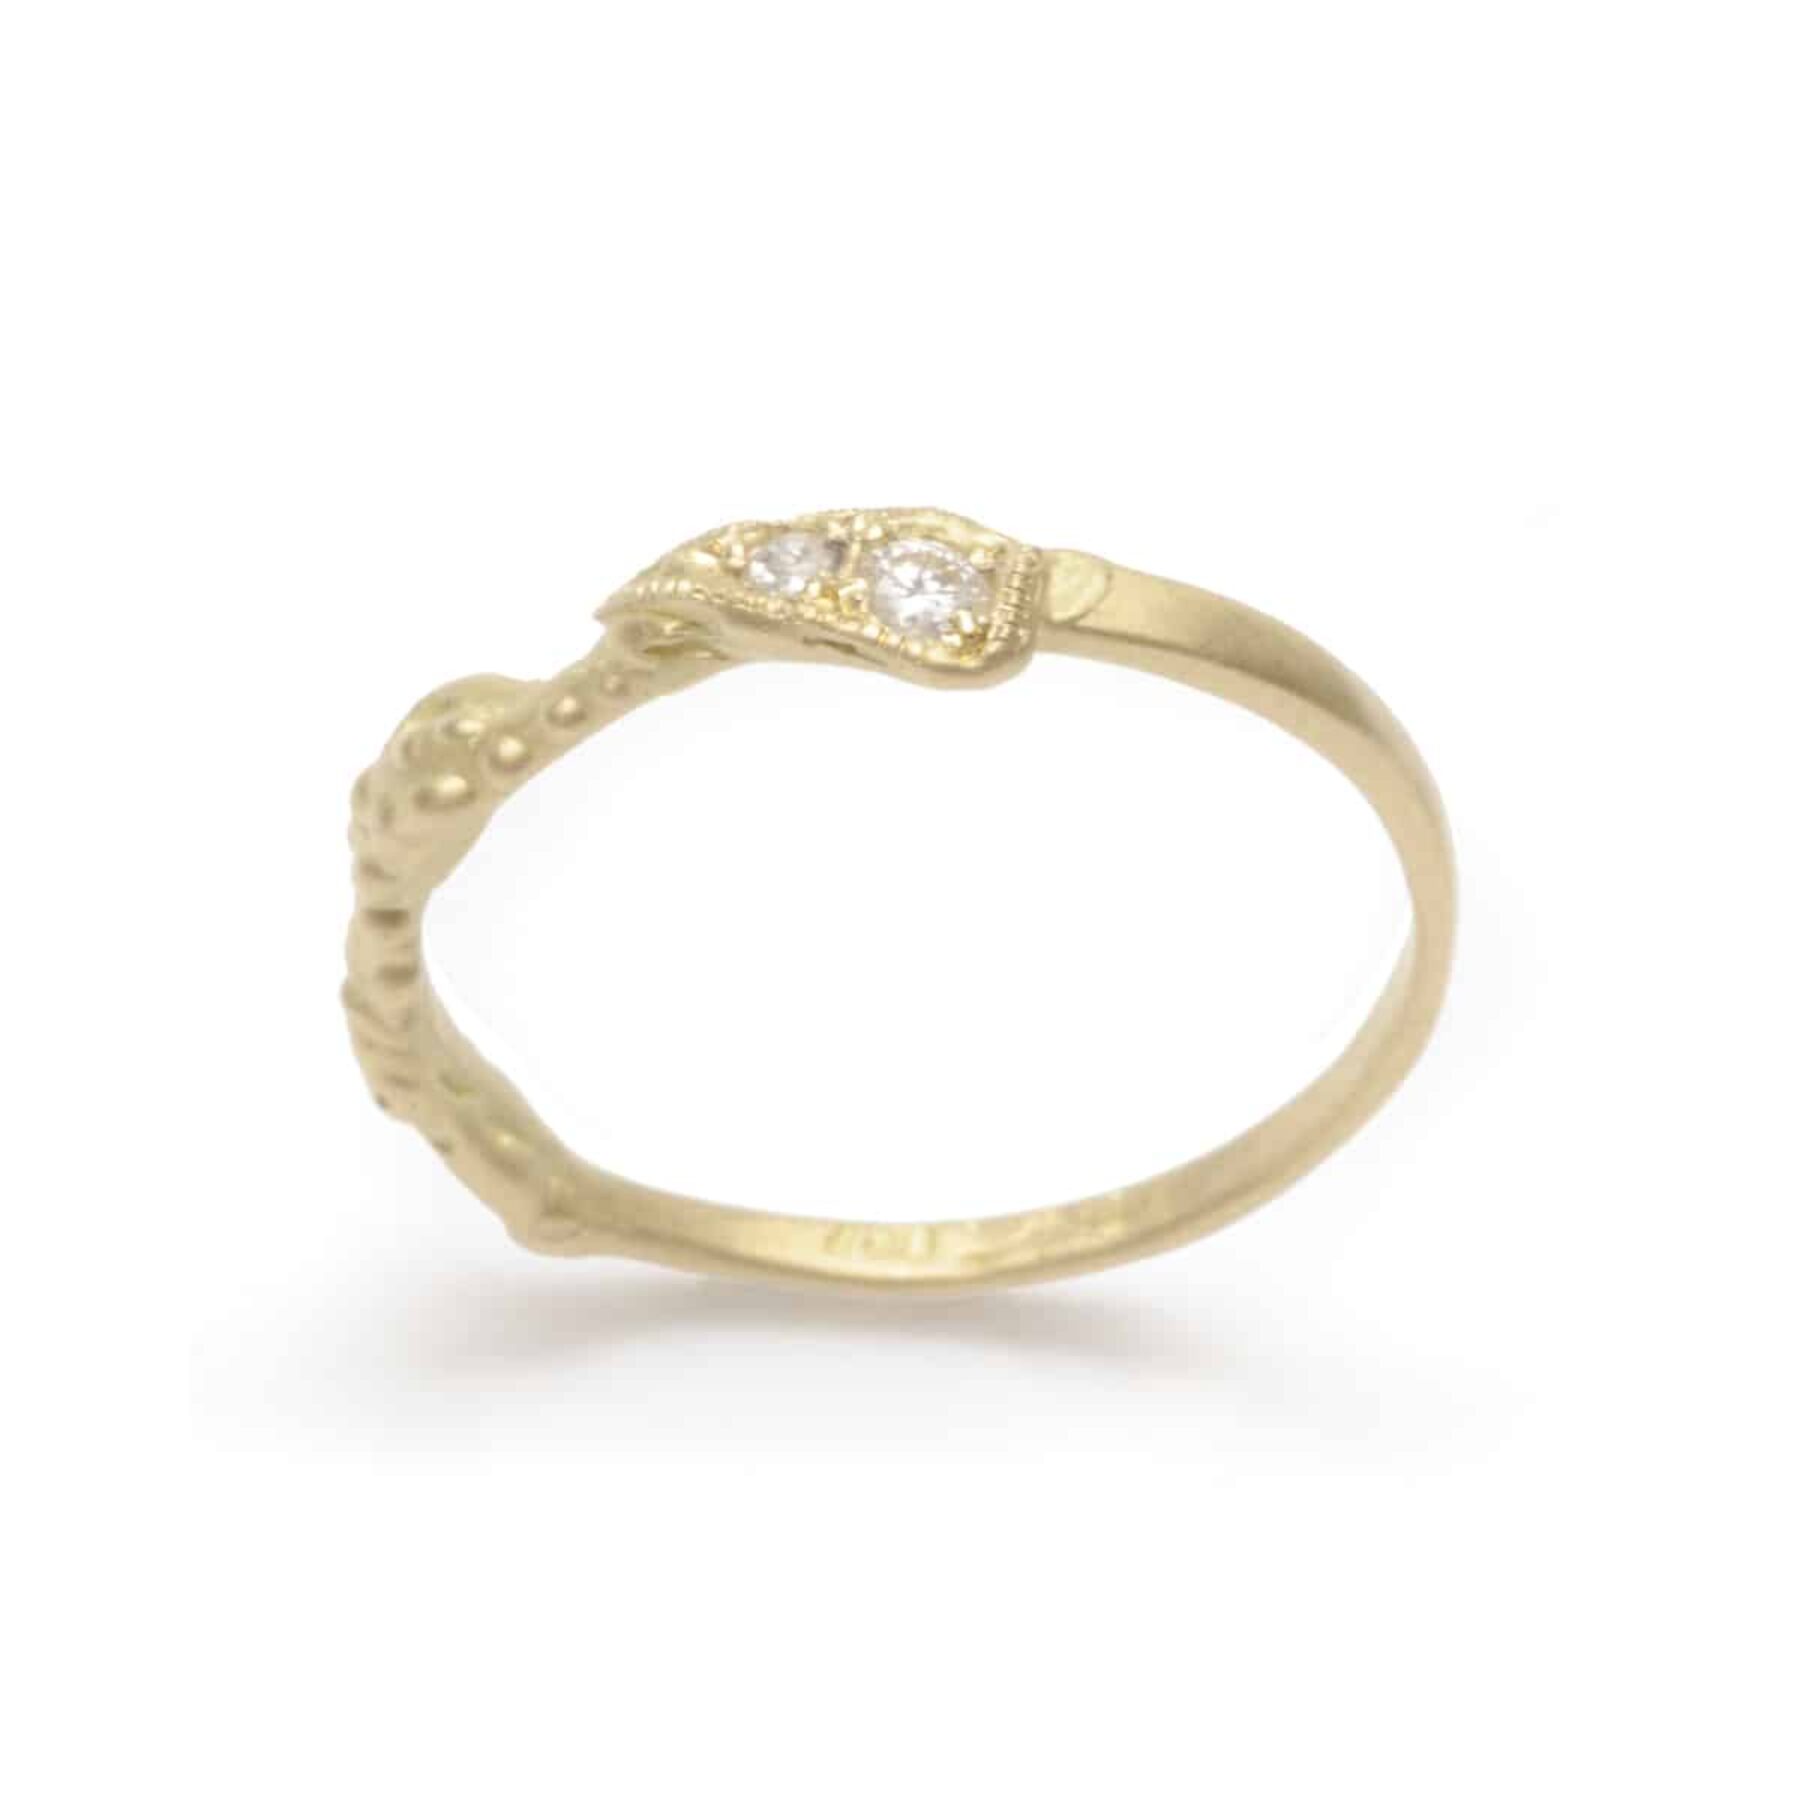 Art Deco gold diamond wedding ring by Julia Deville